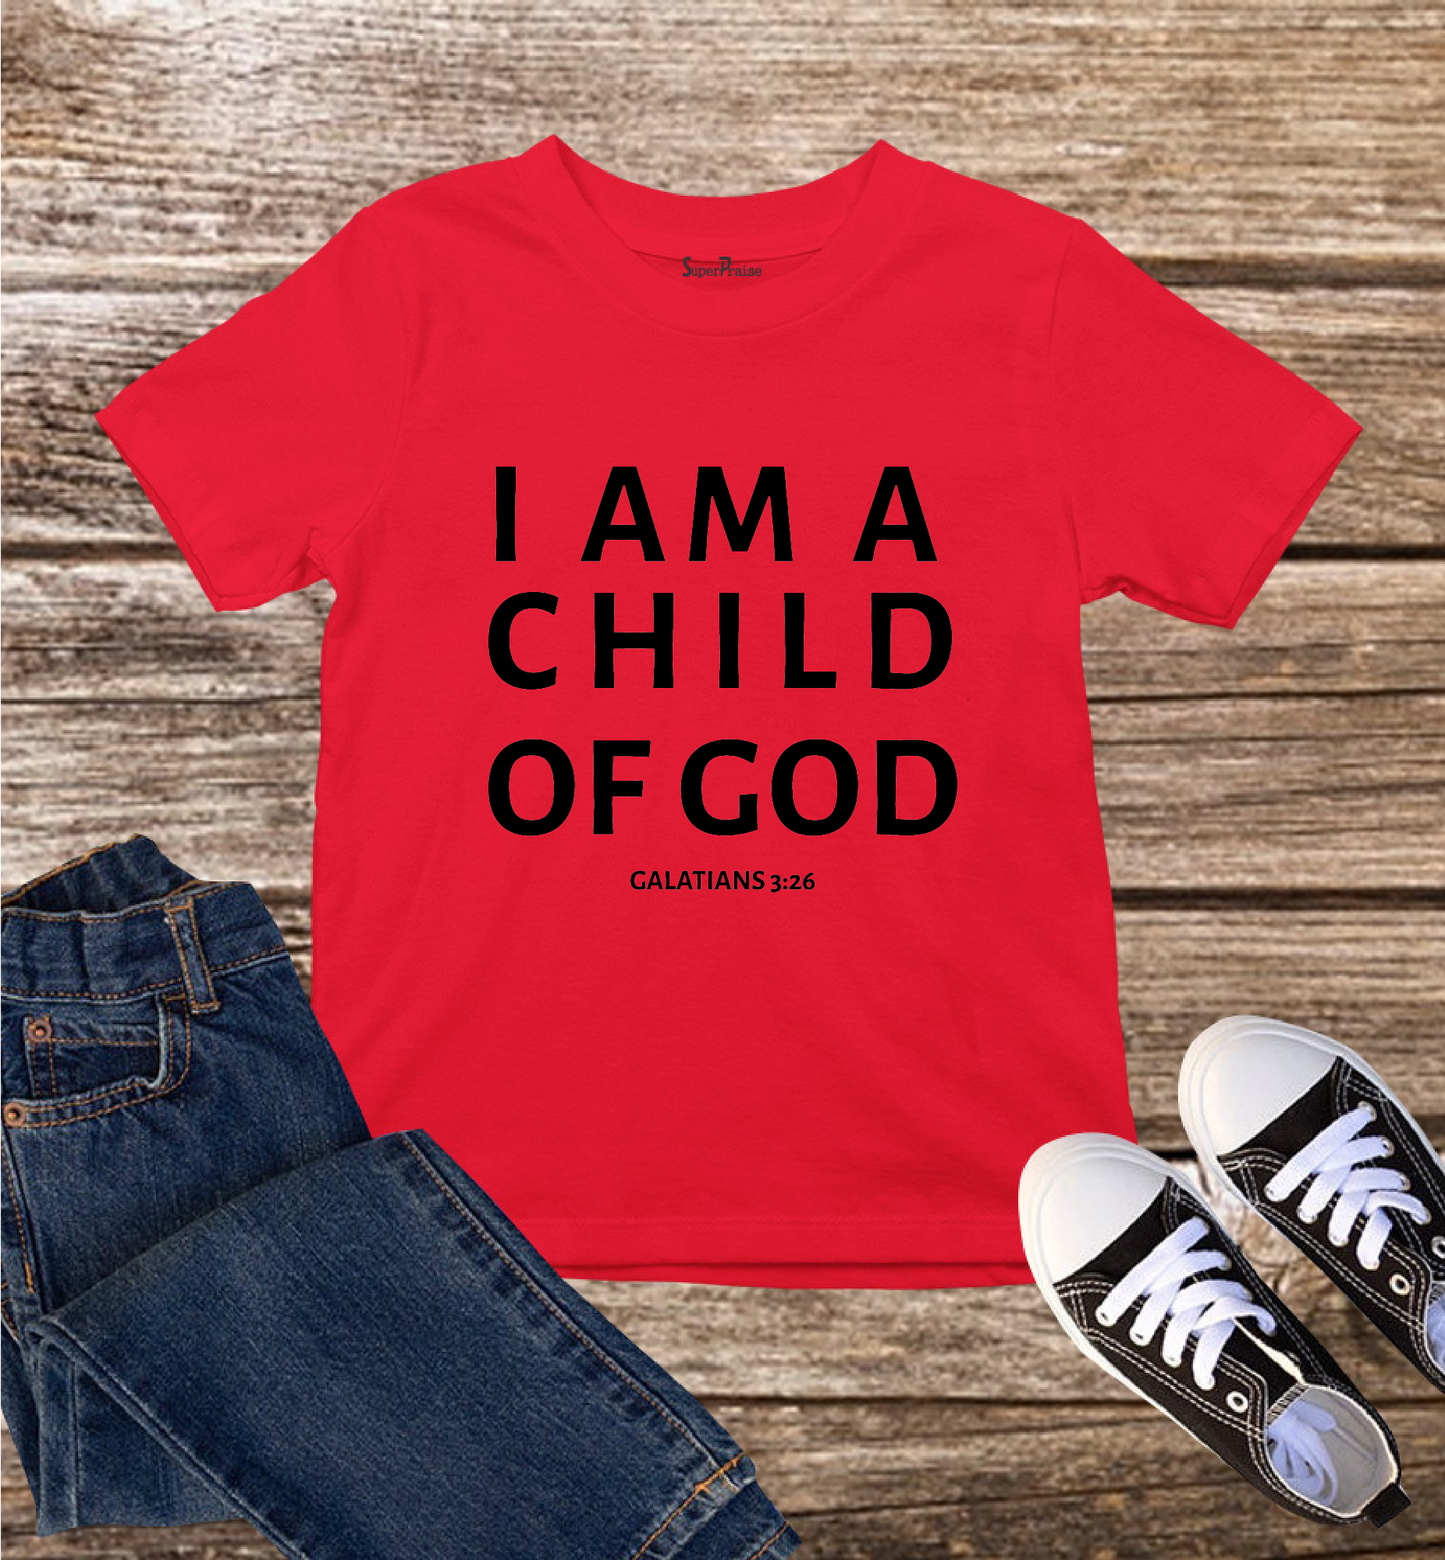 I Am A Child of God Kids T Shirt